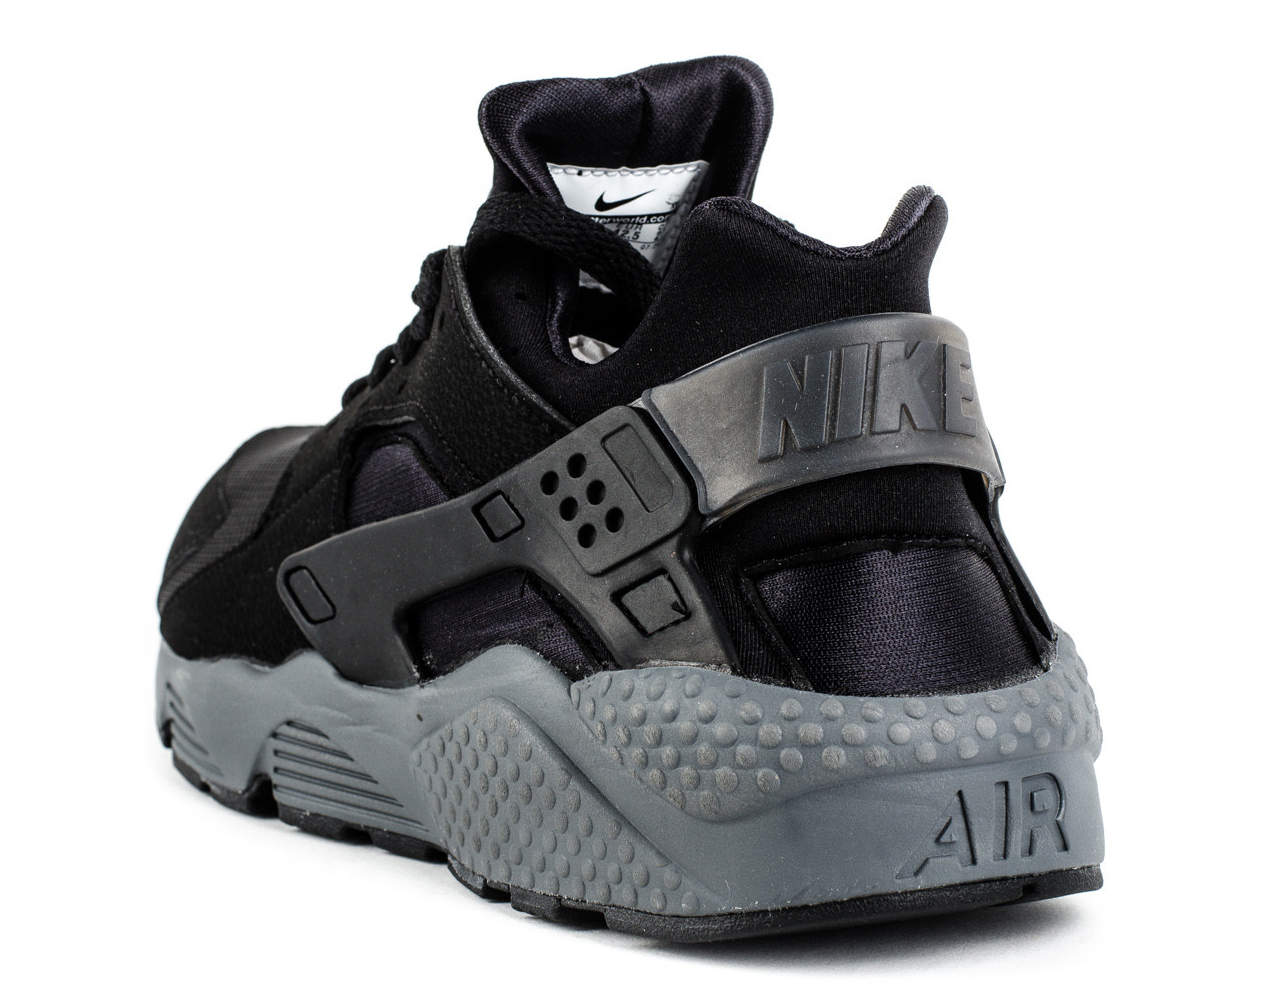 Nike Air Huaraches in Black and Grey 